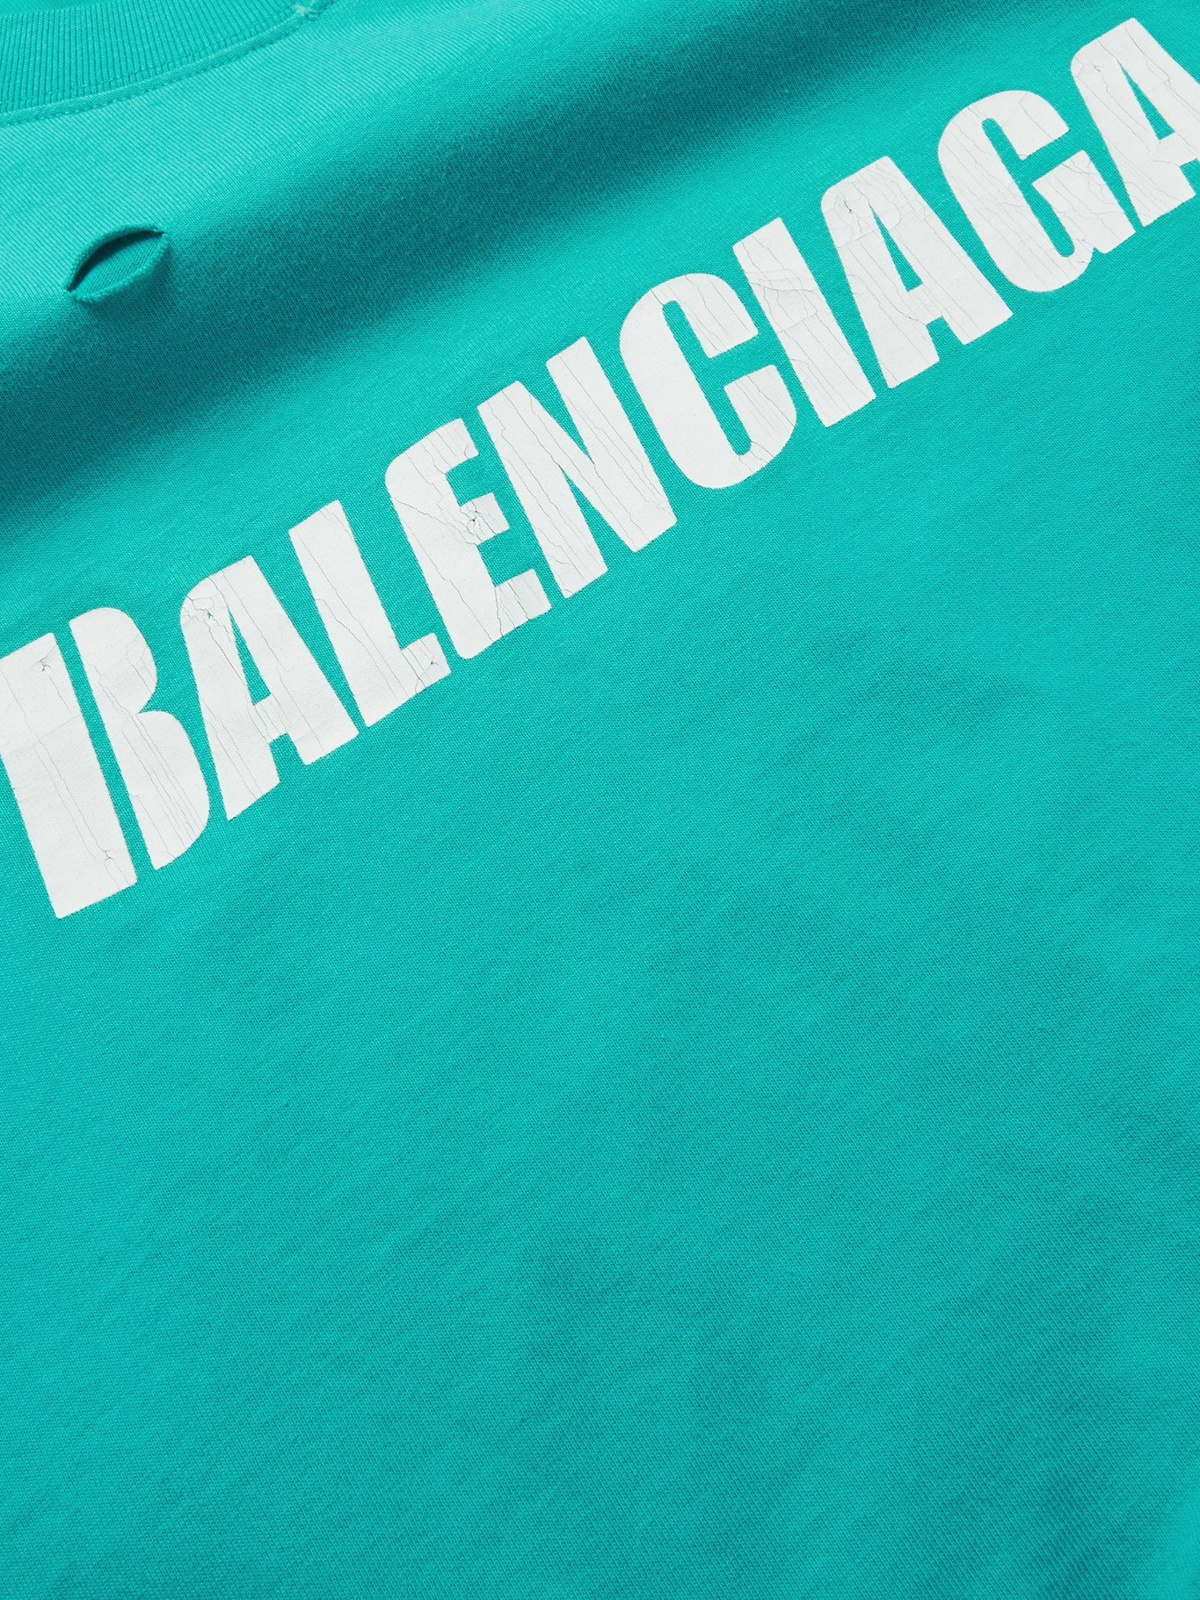 Balenciaga Distressed Oversize Logo T-shirt In Azzurro